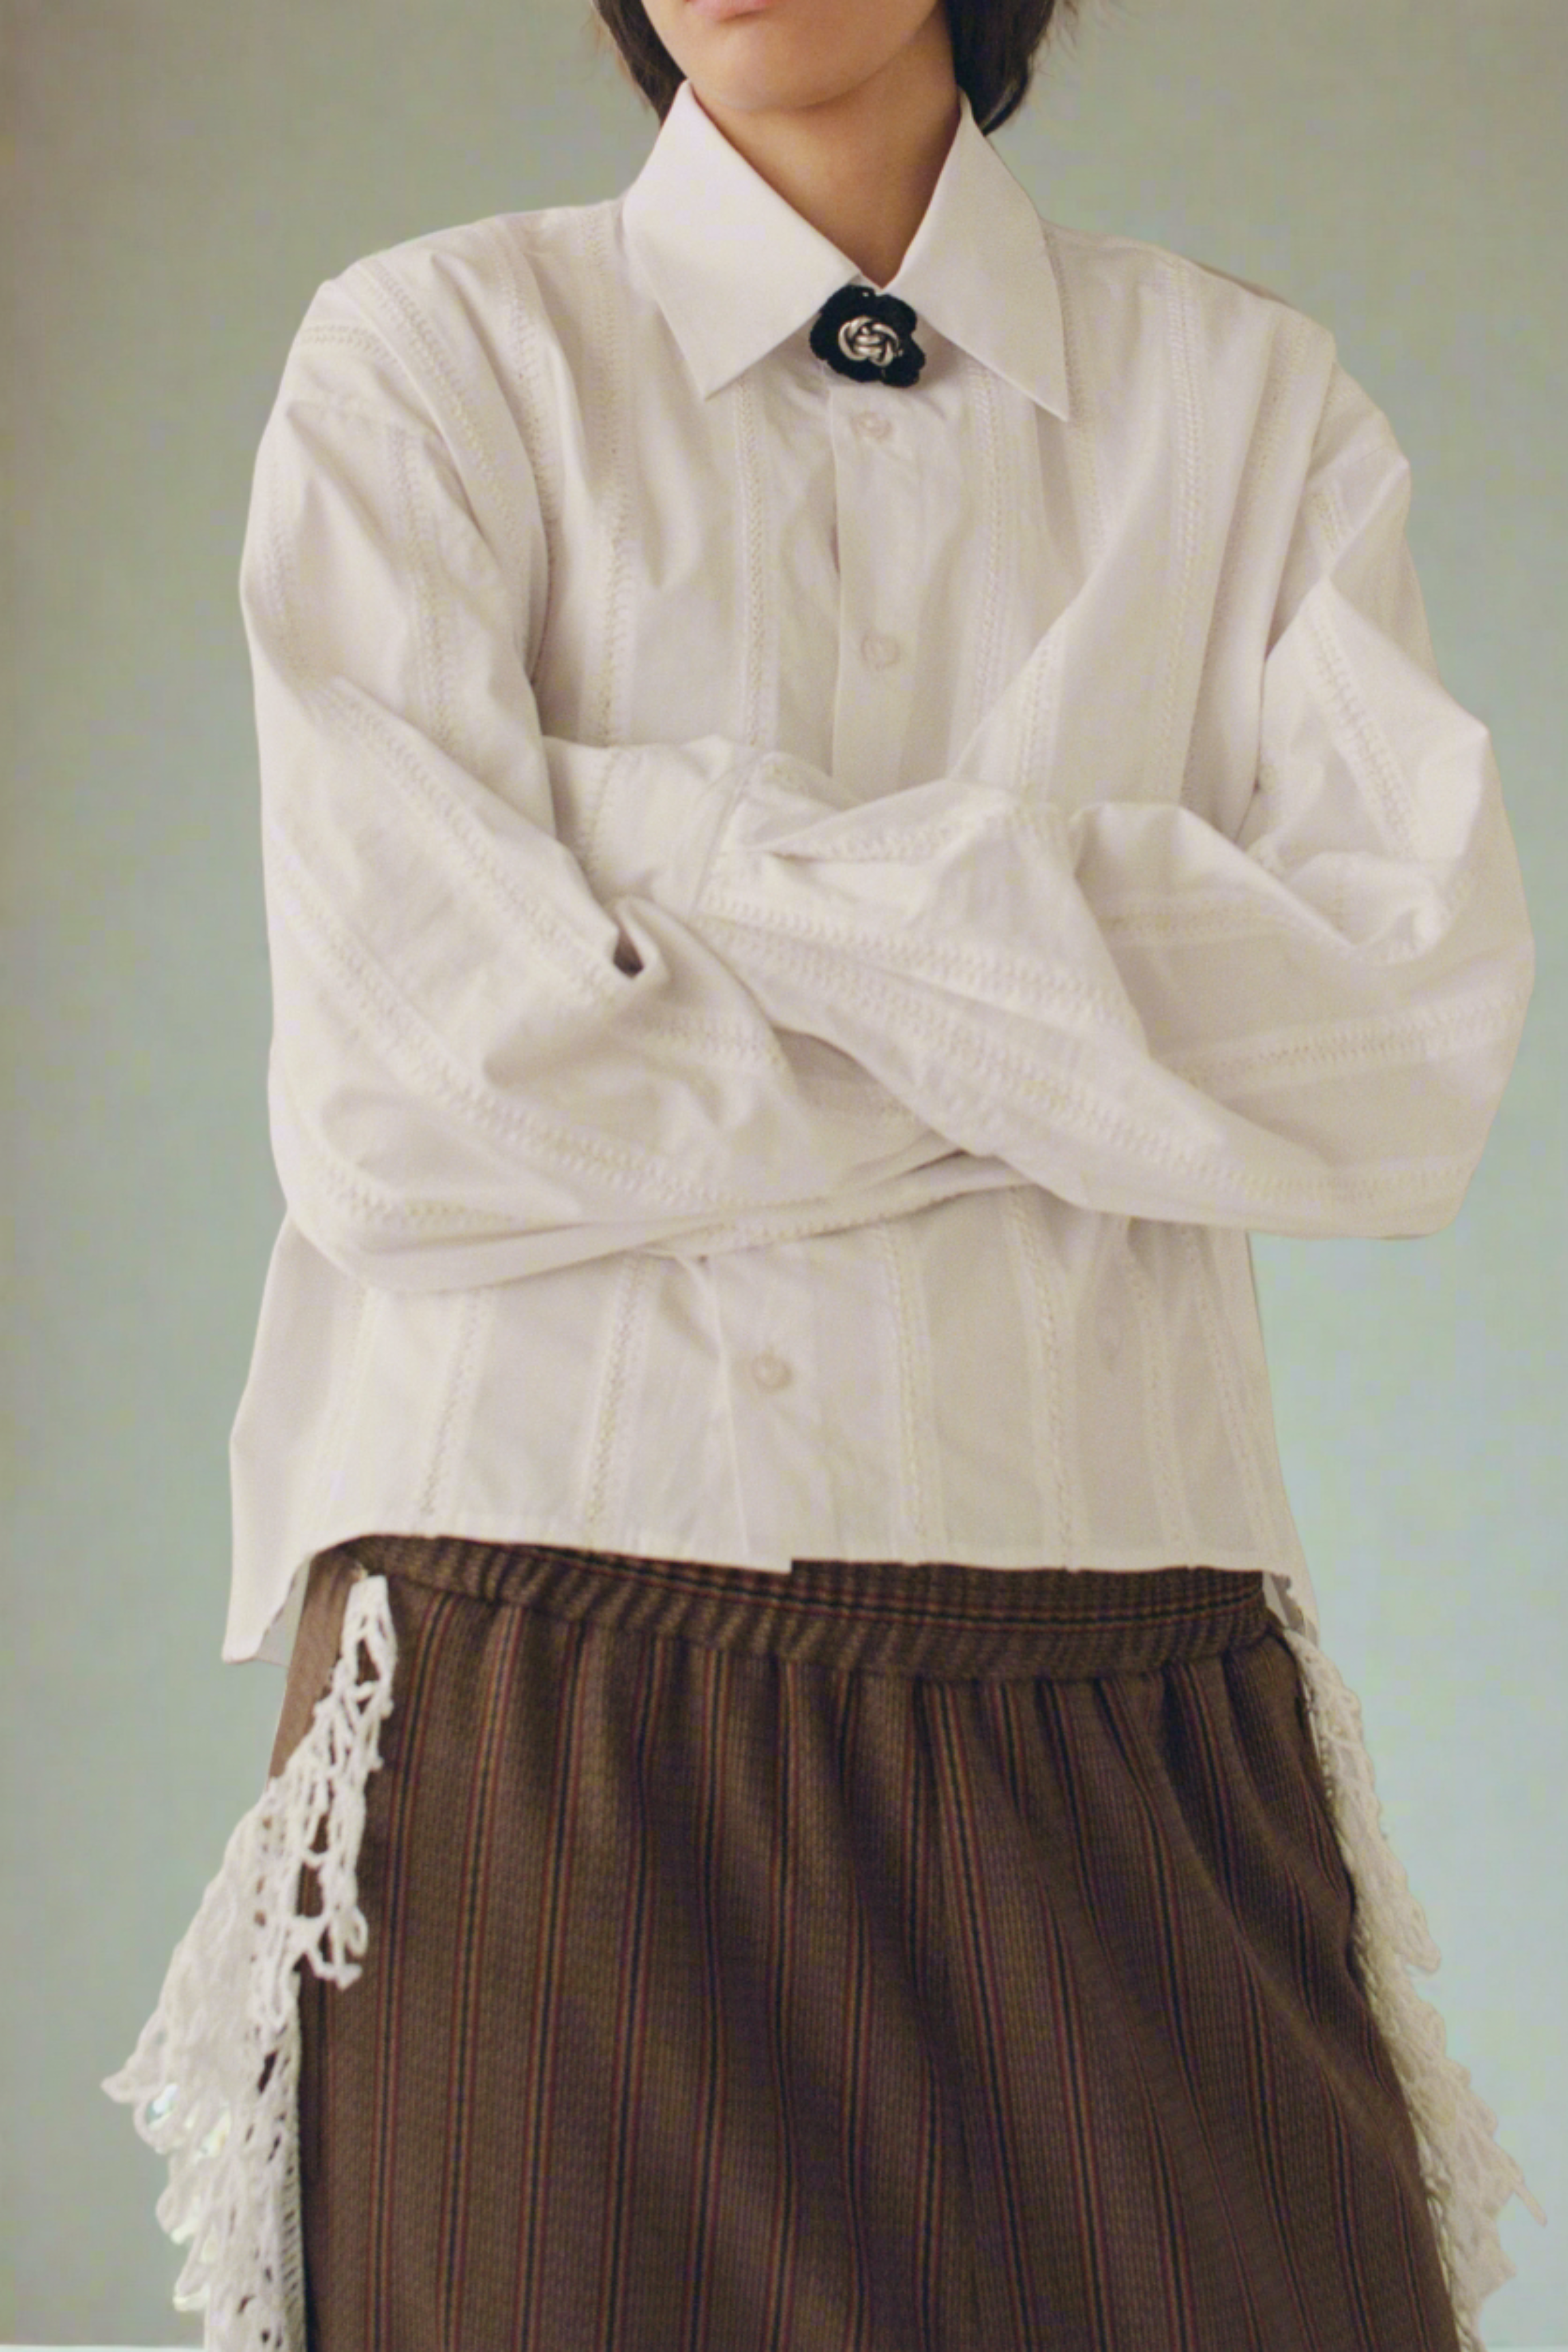 DIOTIMA Mossman White Crochet Shirt